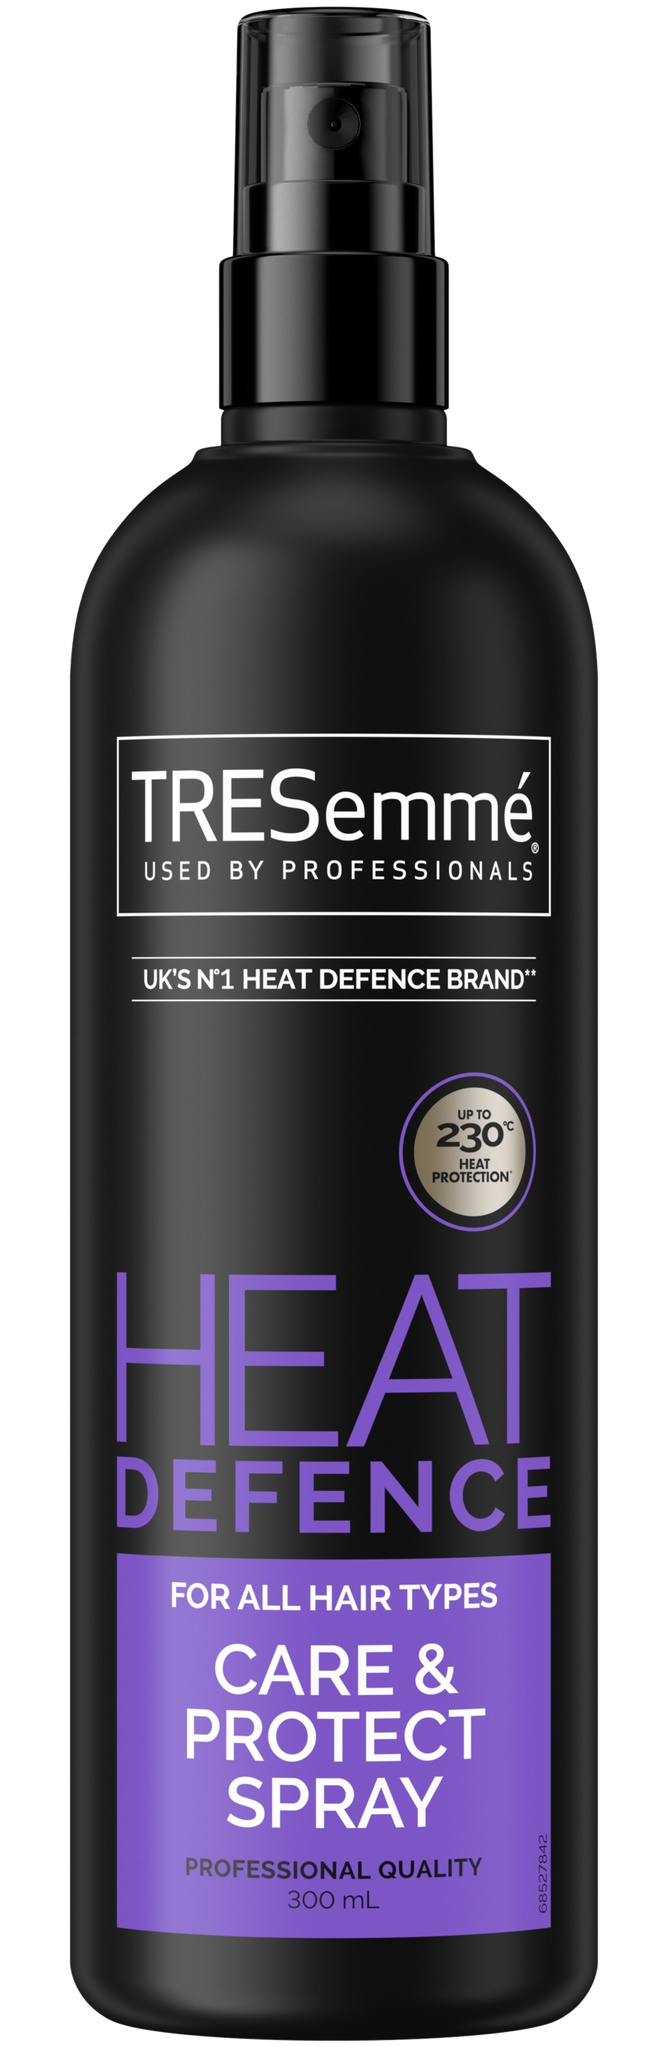 TRESemmé Heat Defence Care & Protect Spray